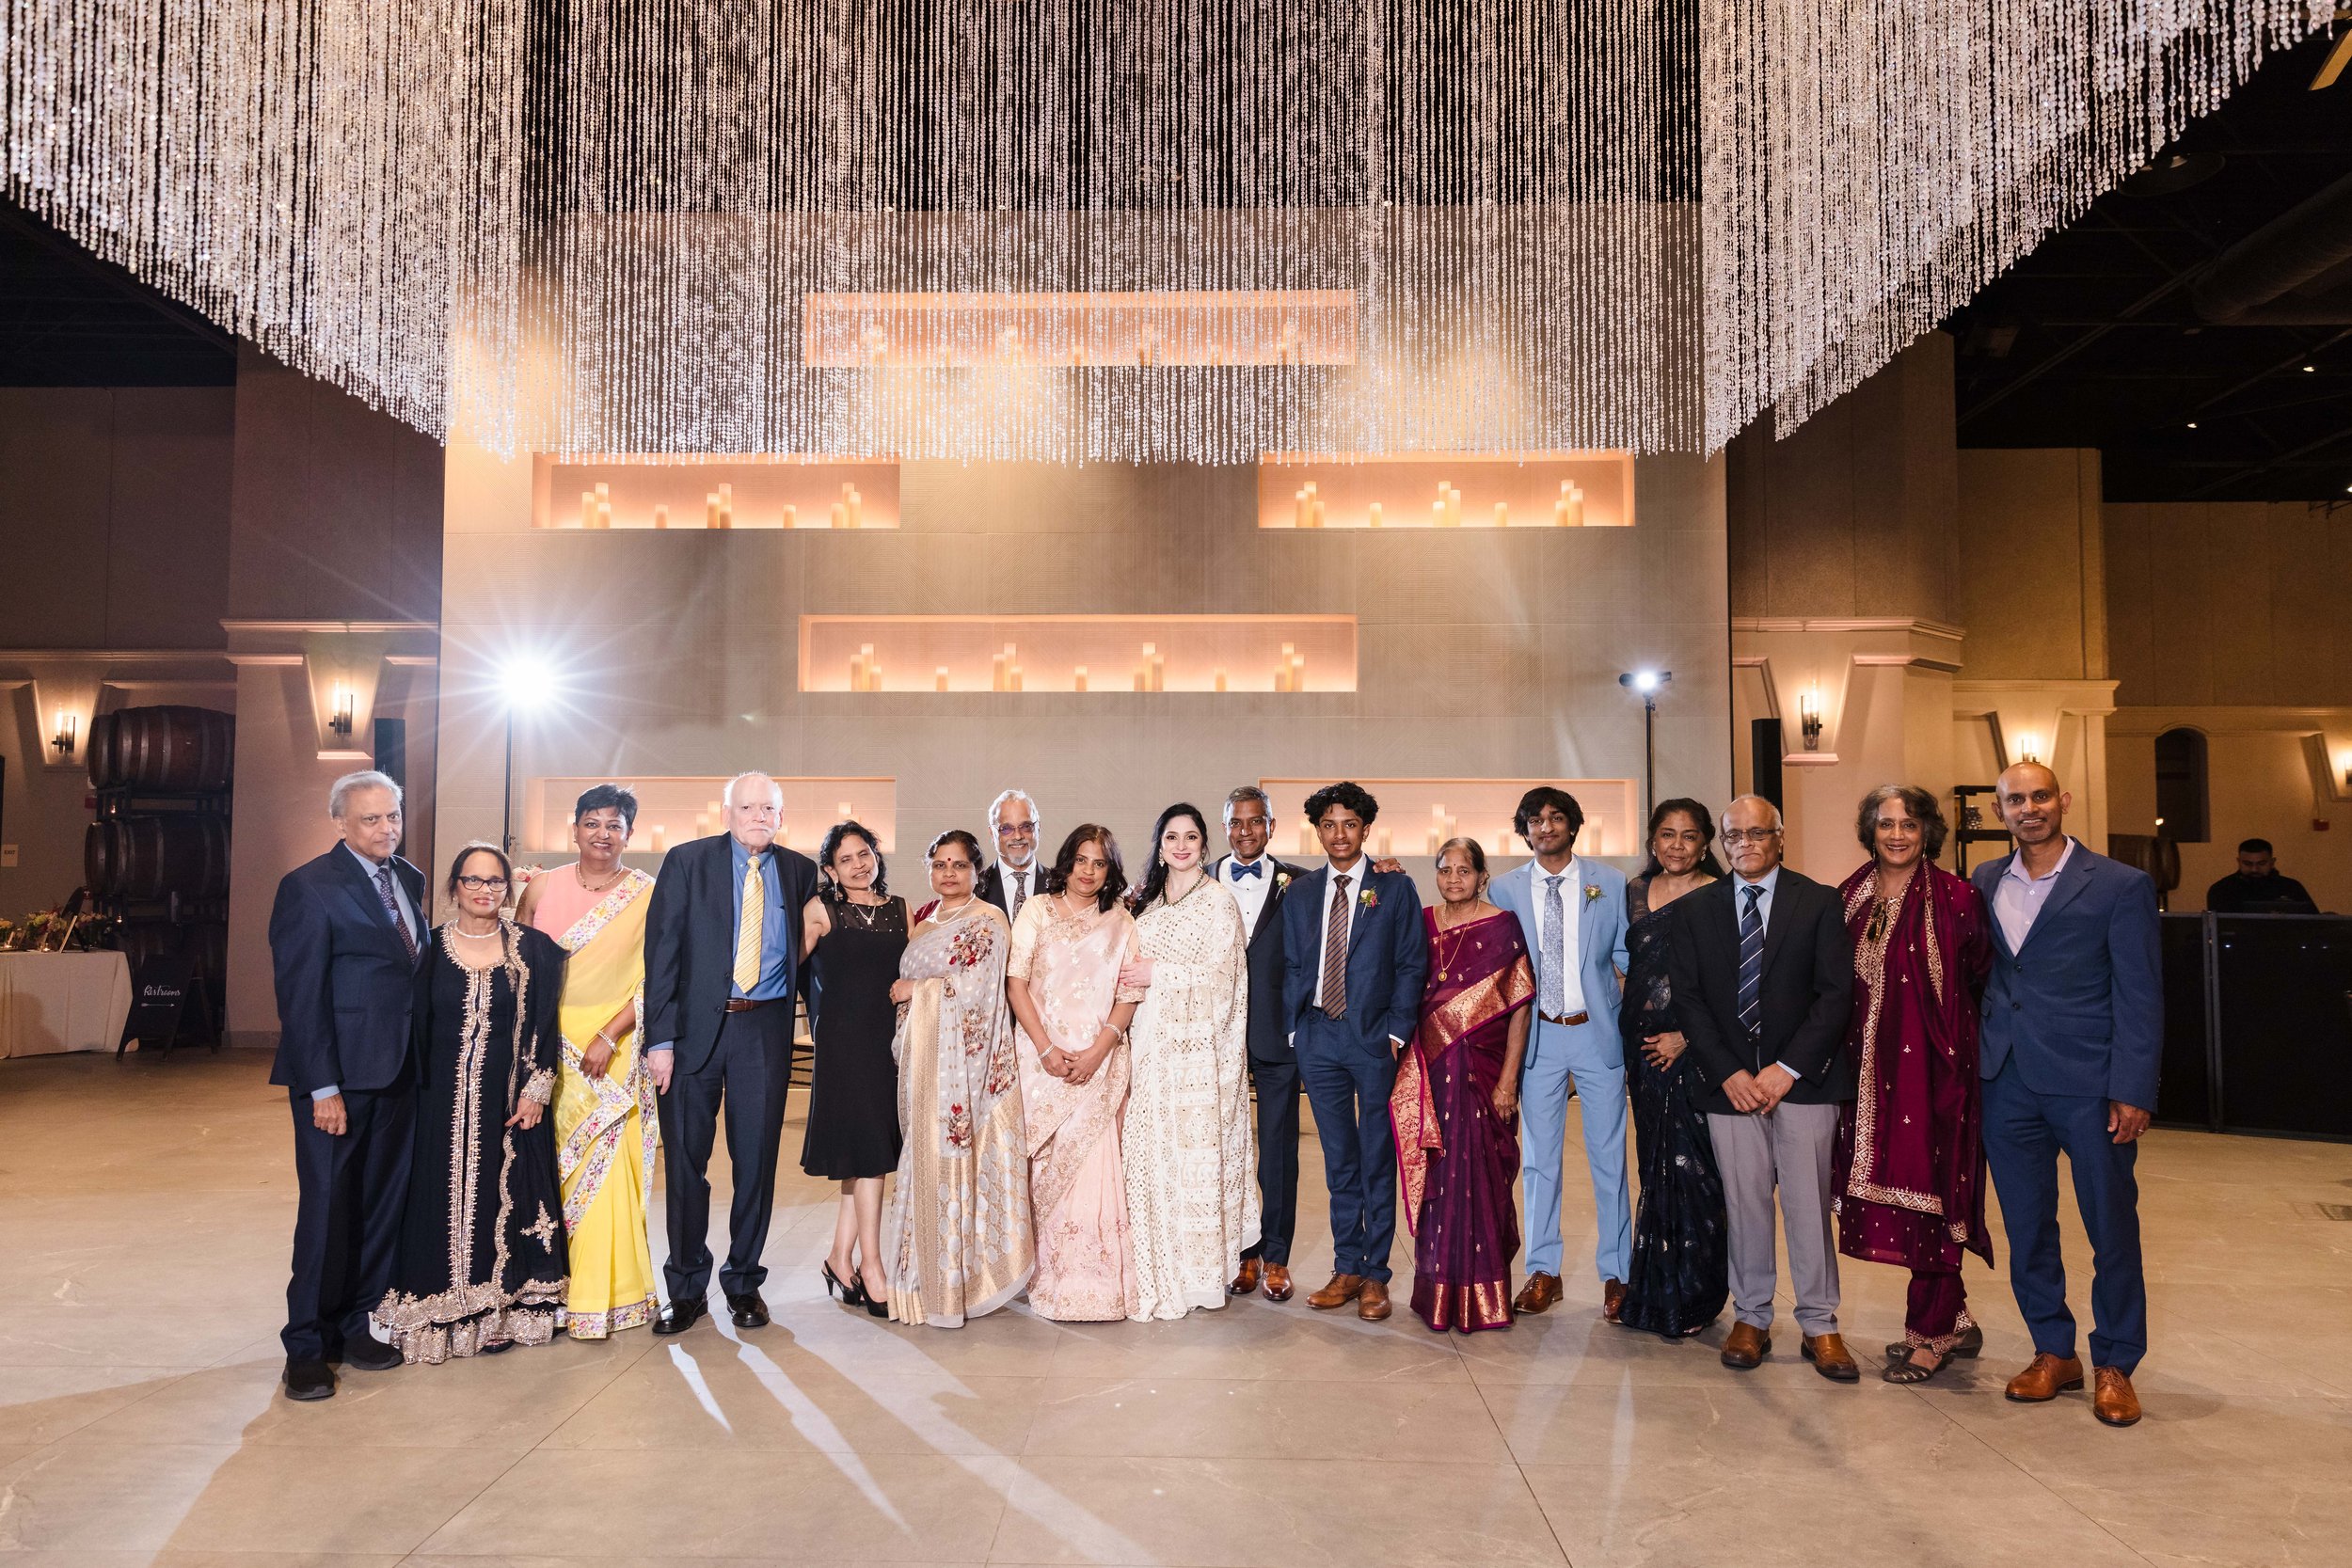 Indian Wedding Reception at the Casa Real in Pleasanton